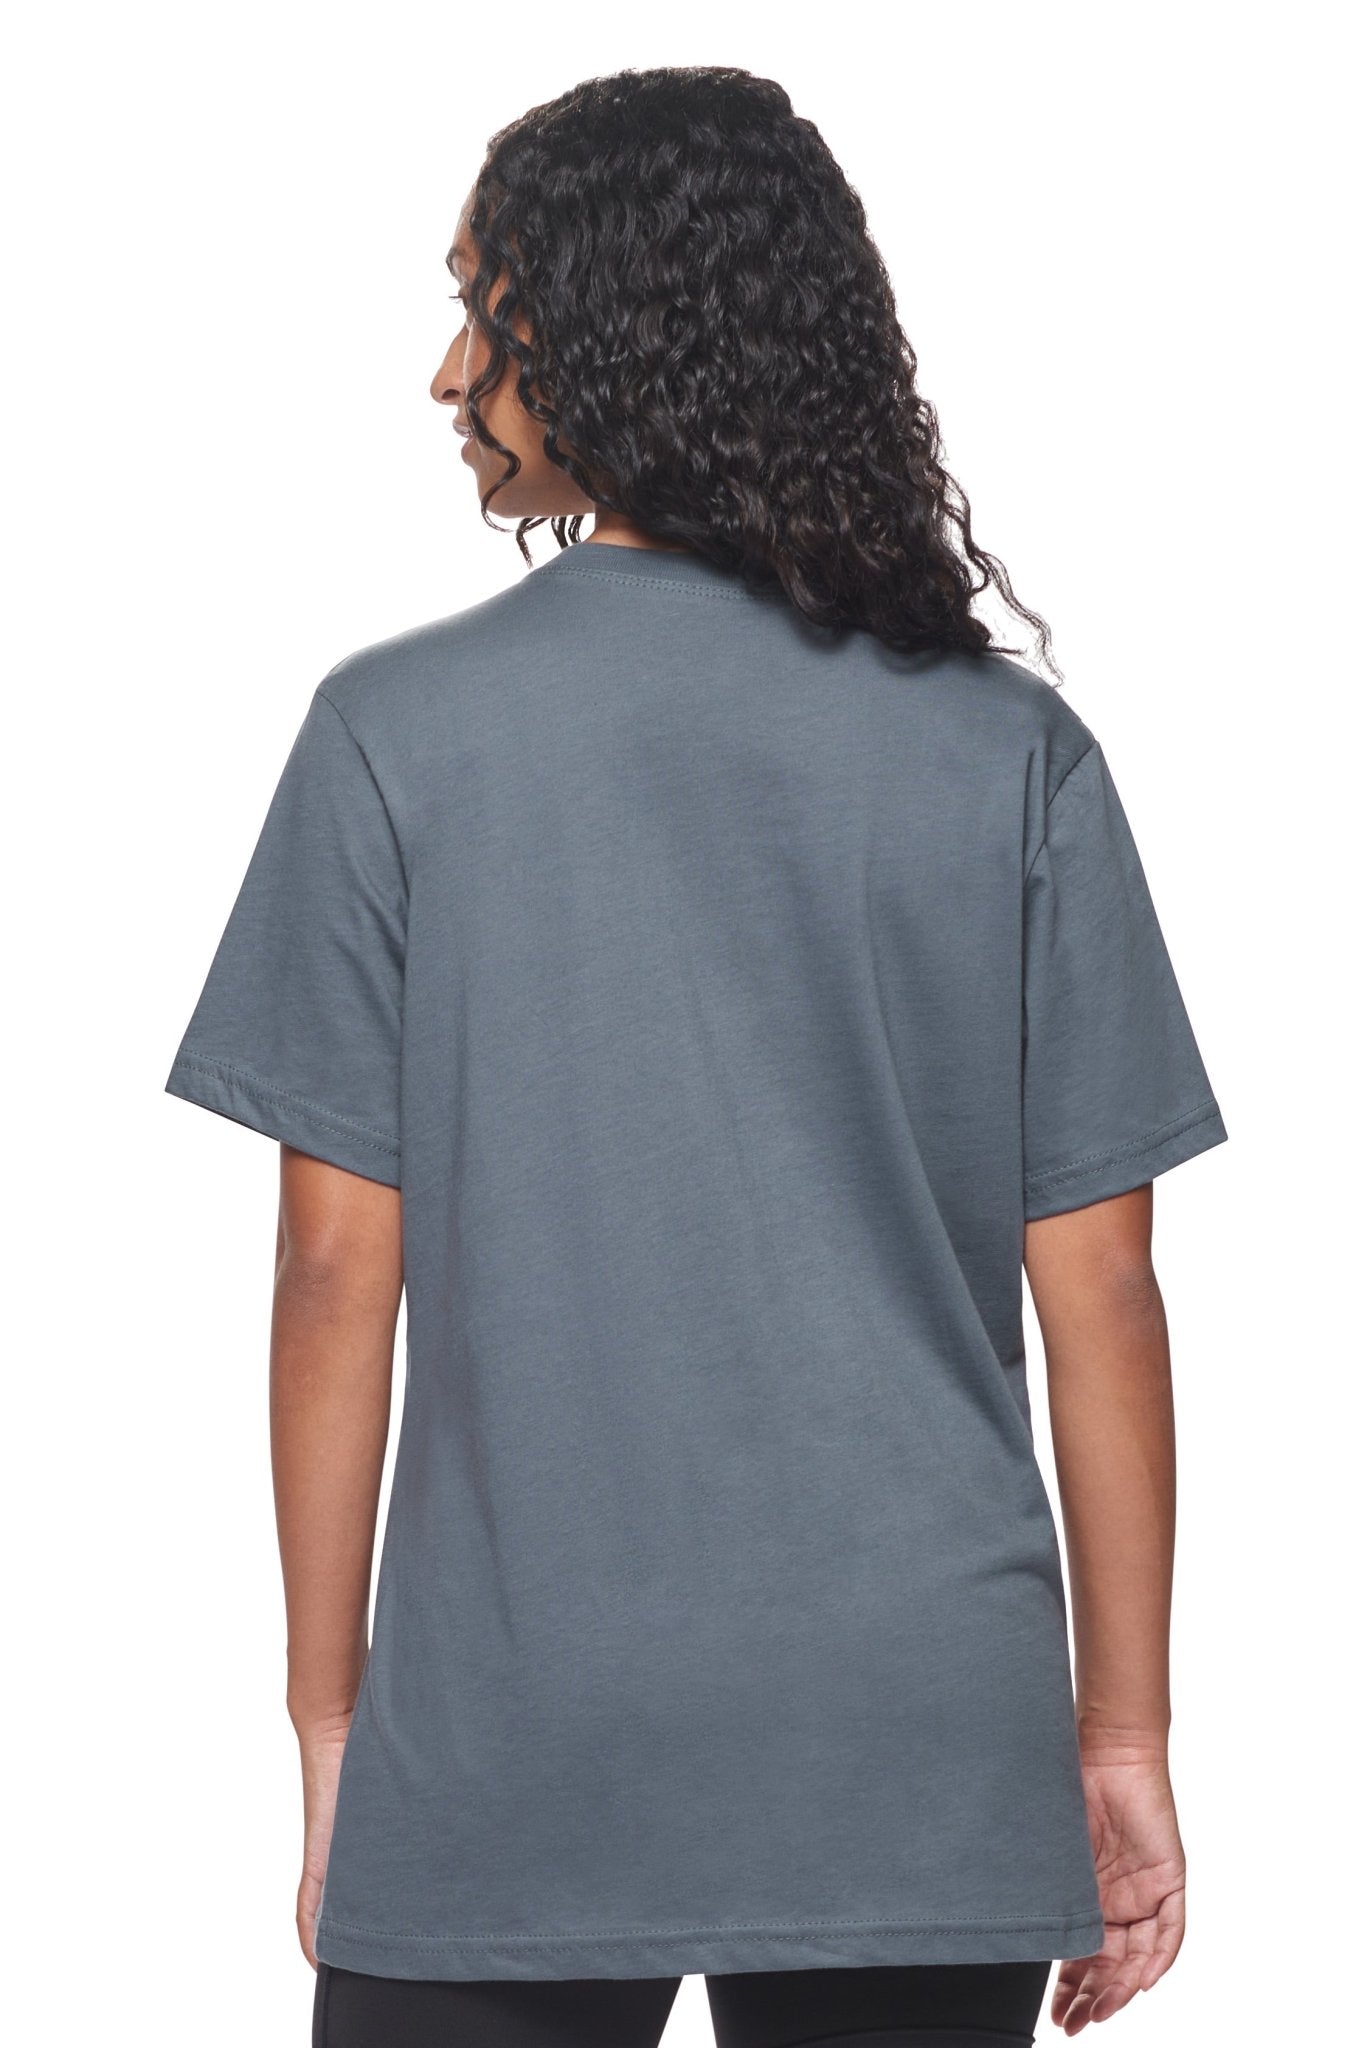 Expert Brand Unisex 100% Organic Cotton Crewneck T-Shirt - Plus - DressbarnActivewear